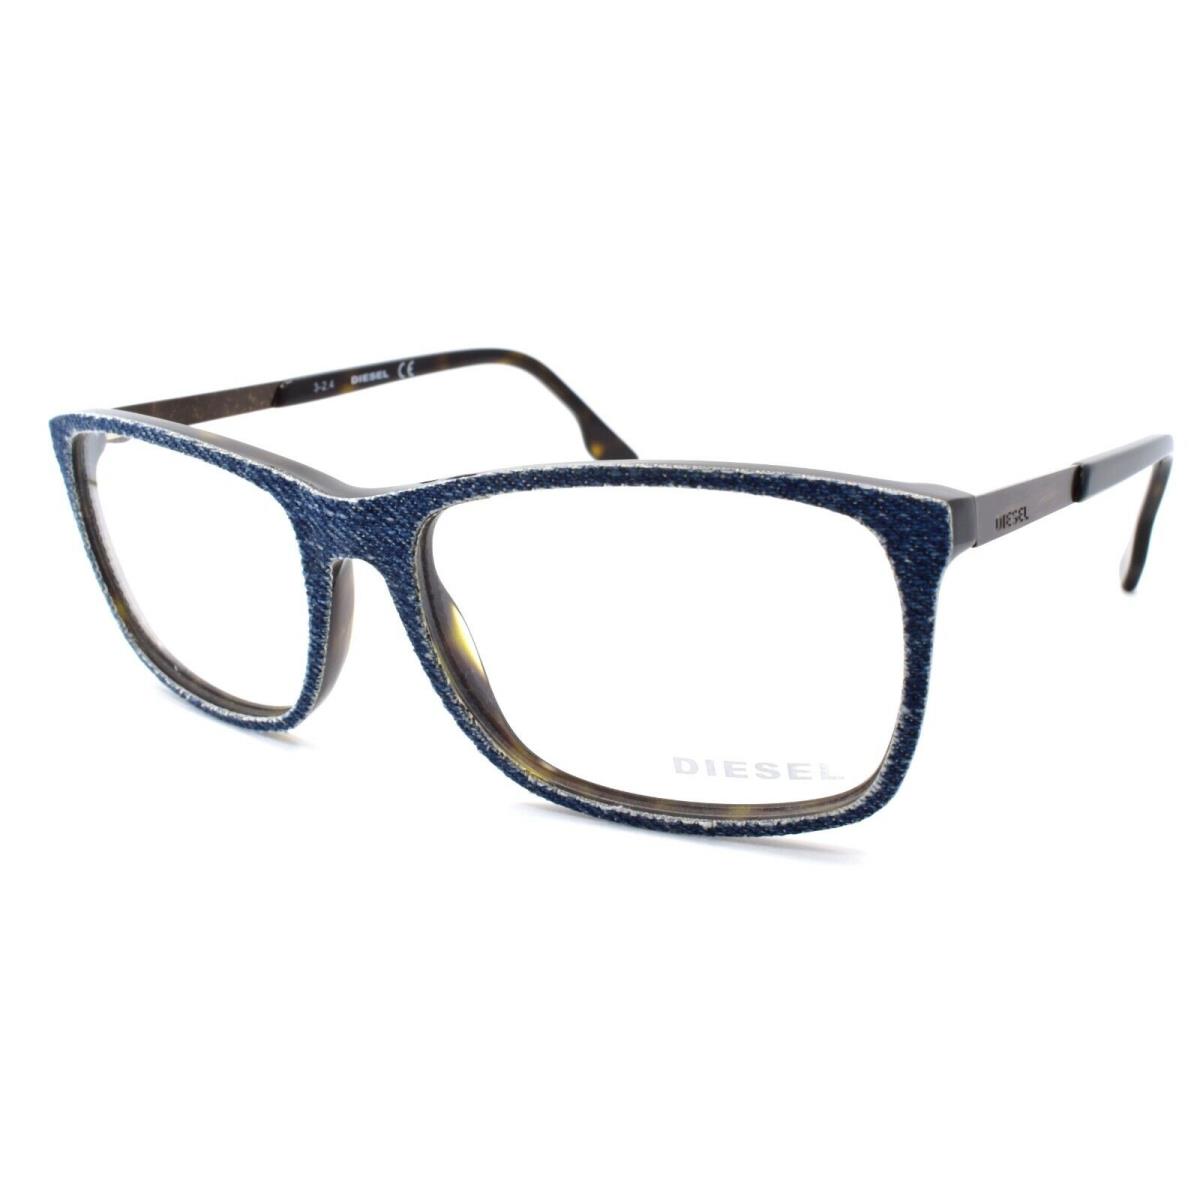 Diesel DL5166 052 Men`s Eyeglasses Frames 55-16-145 Dark Havana / Blue Denim